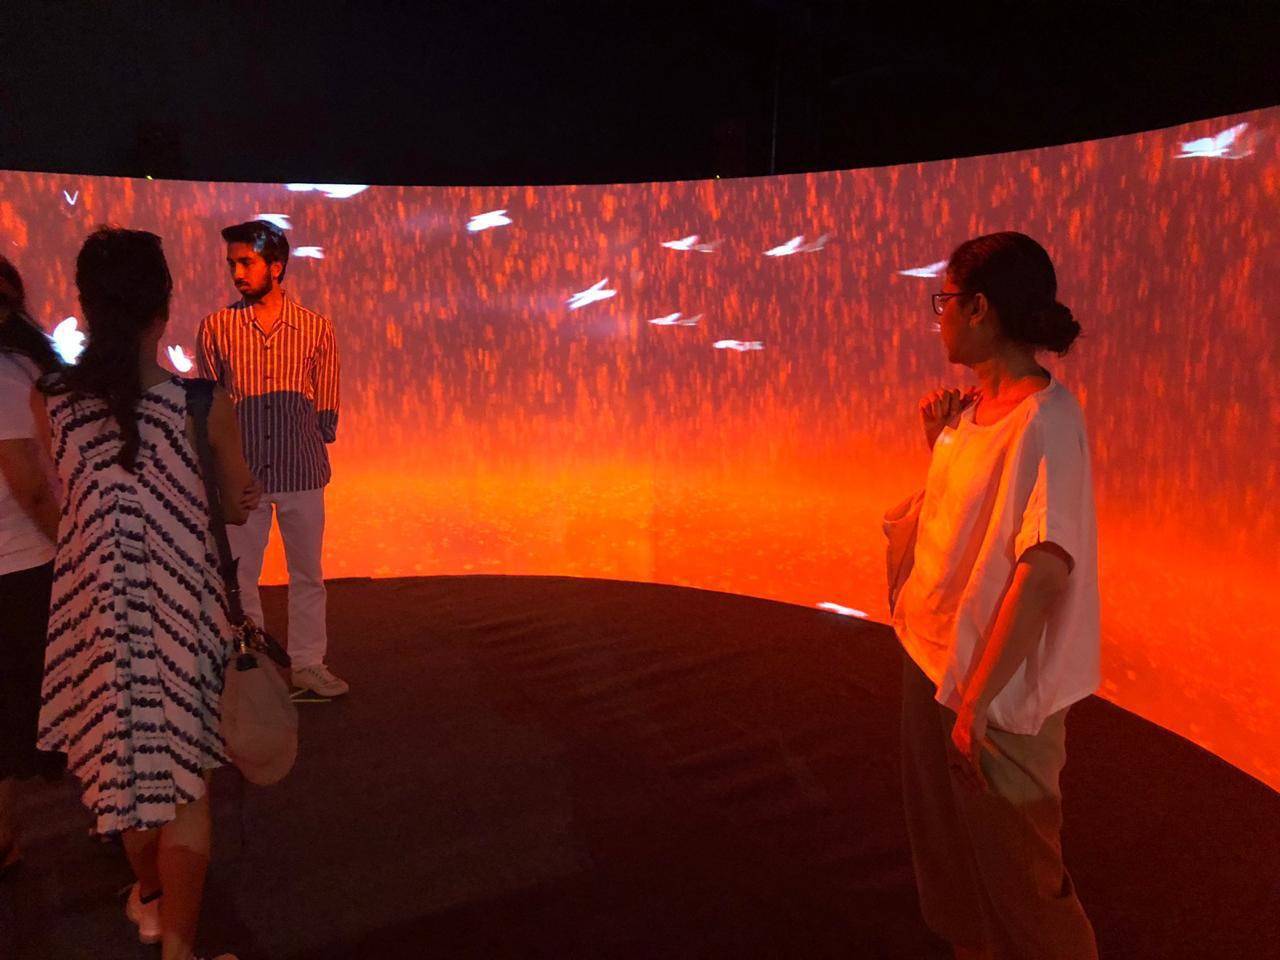 Multimedia installation, Introspection by Michelle Y Poonawalla at Fort Kochi enthralls art buffs